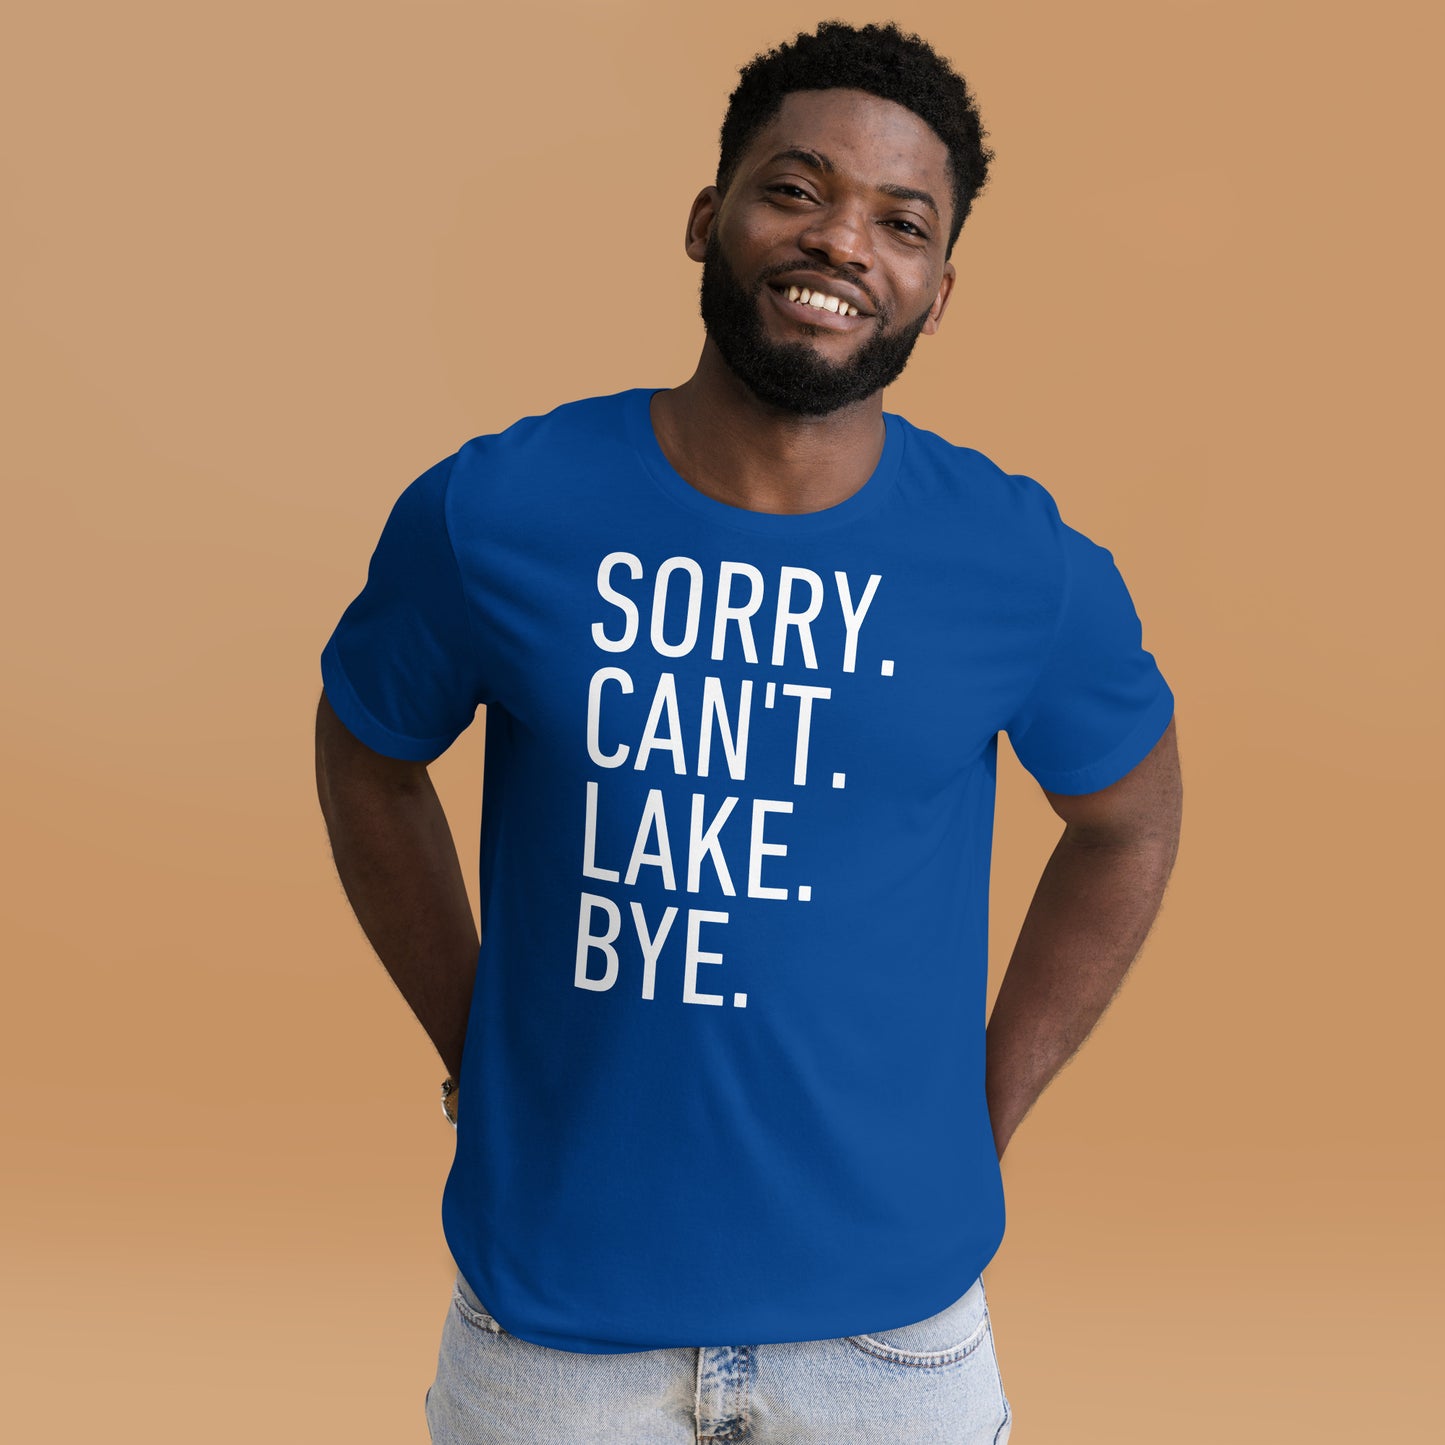 Sorry. Can't. Lake. Bye. T-Shirt